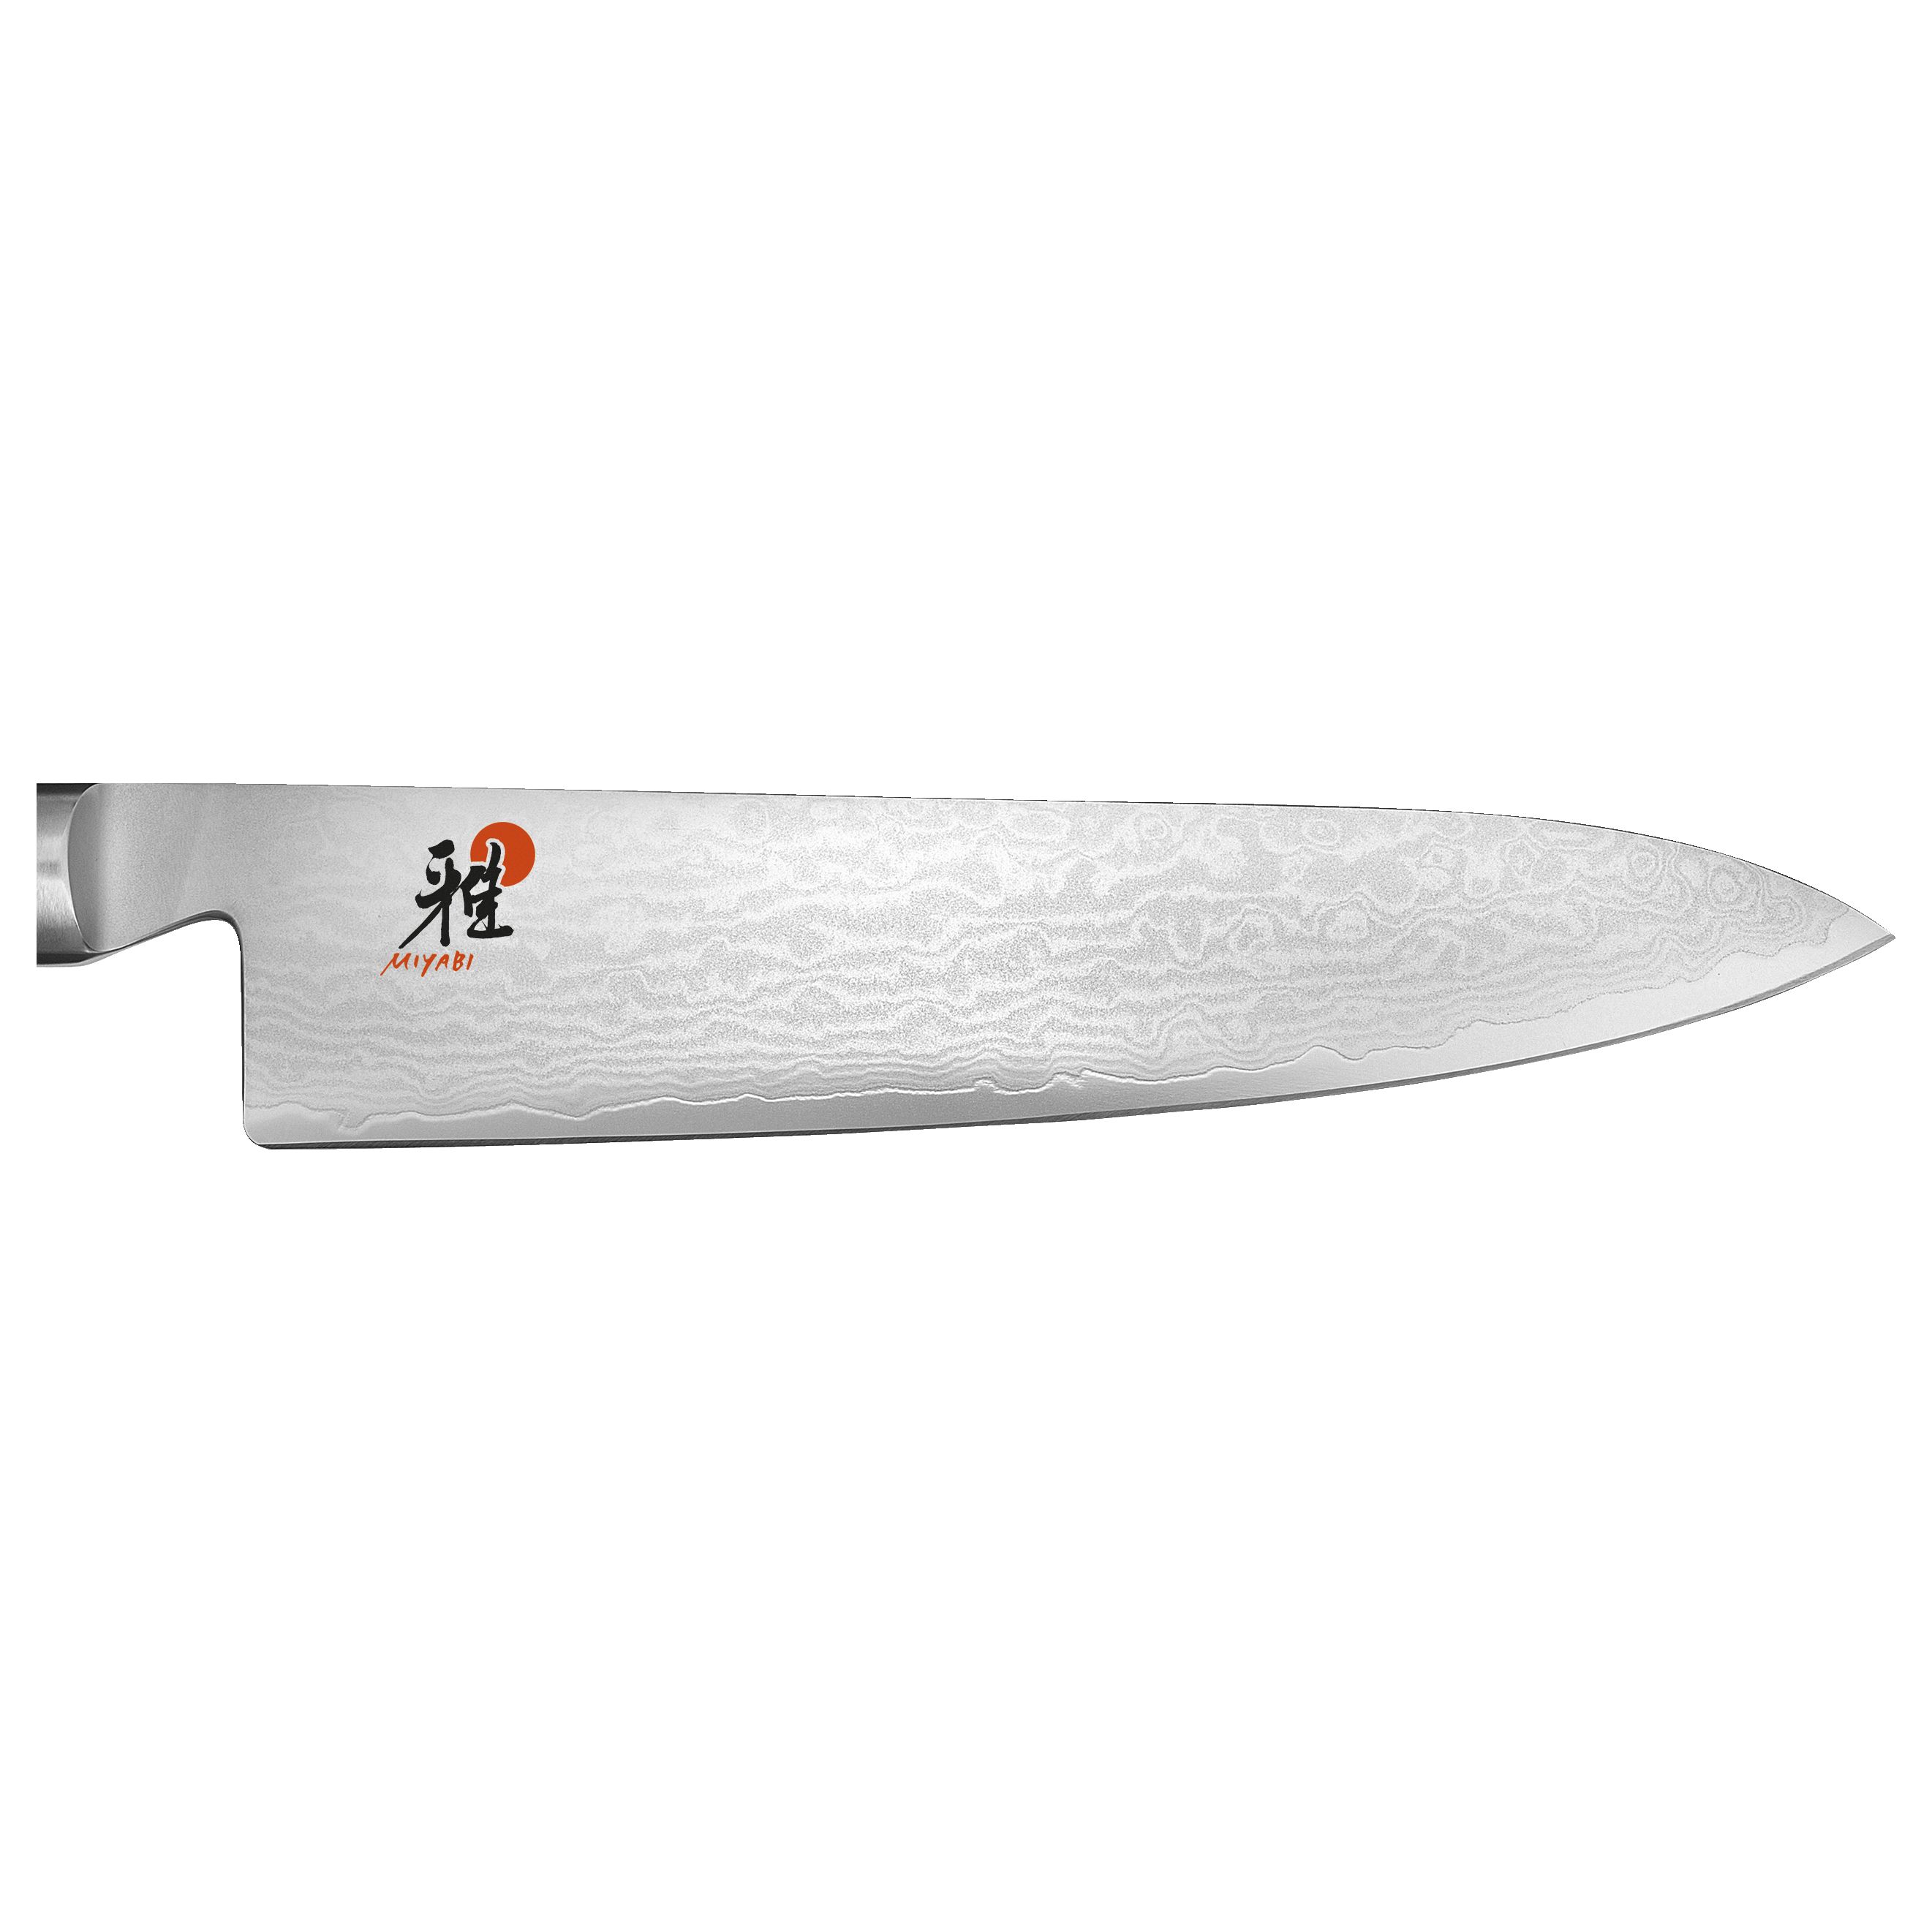 Miyabi Koh 8-inch Chef's Knife — Relish Kitchen Store